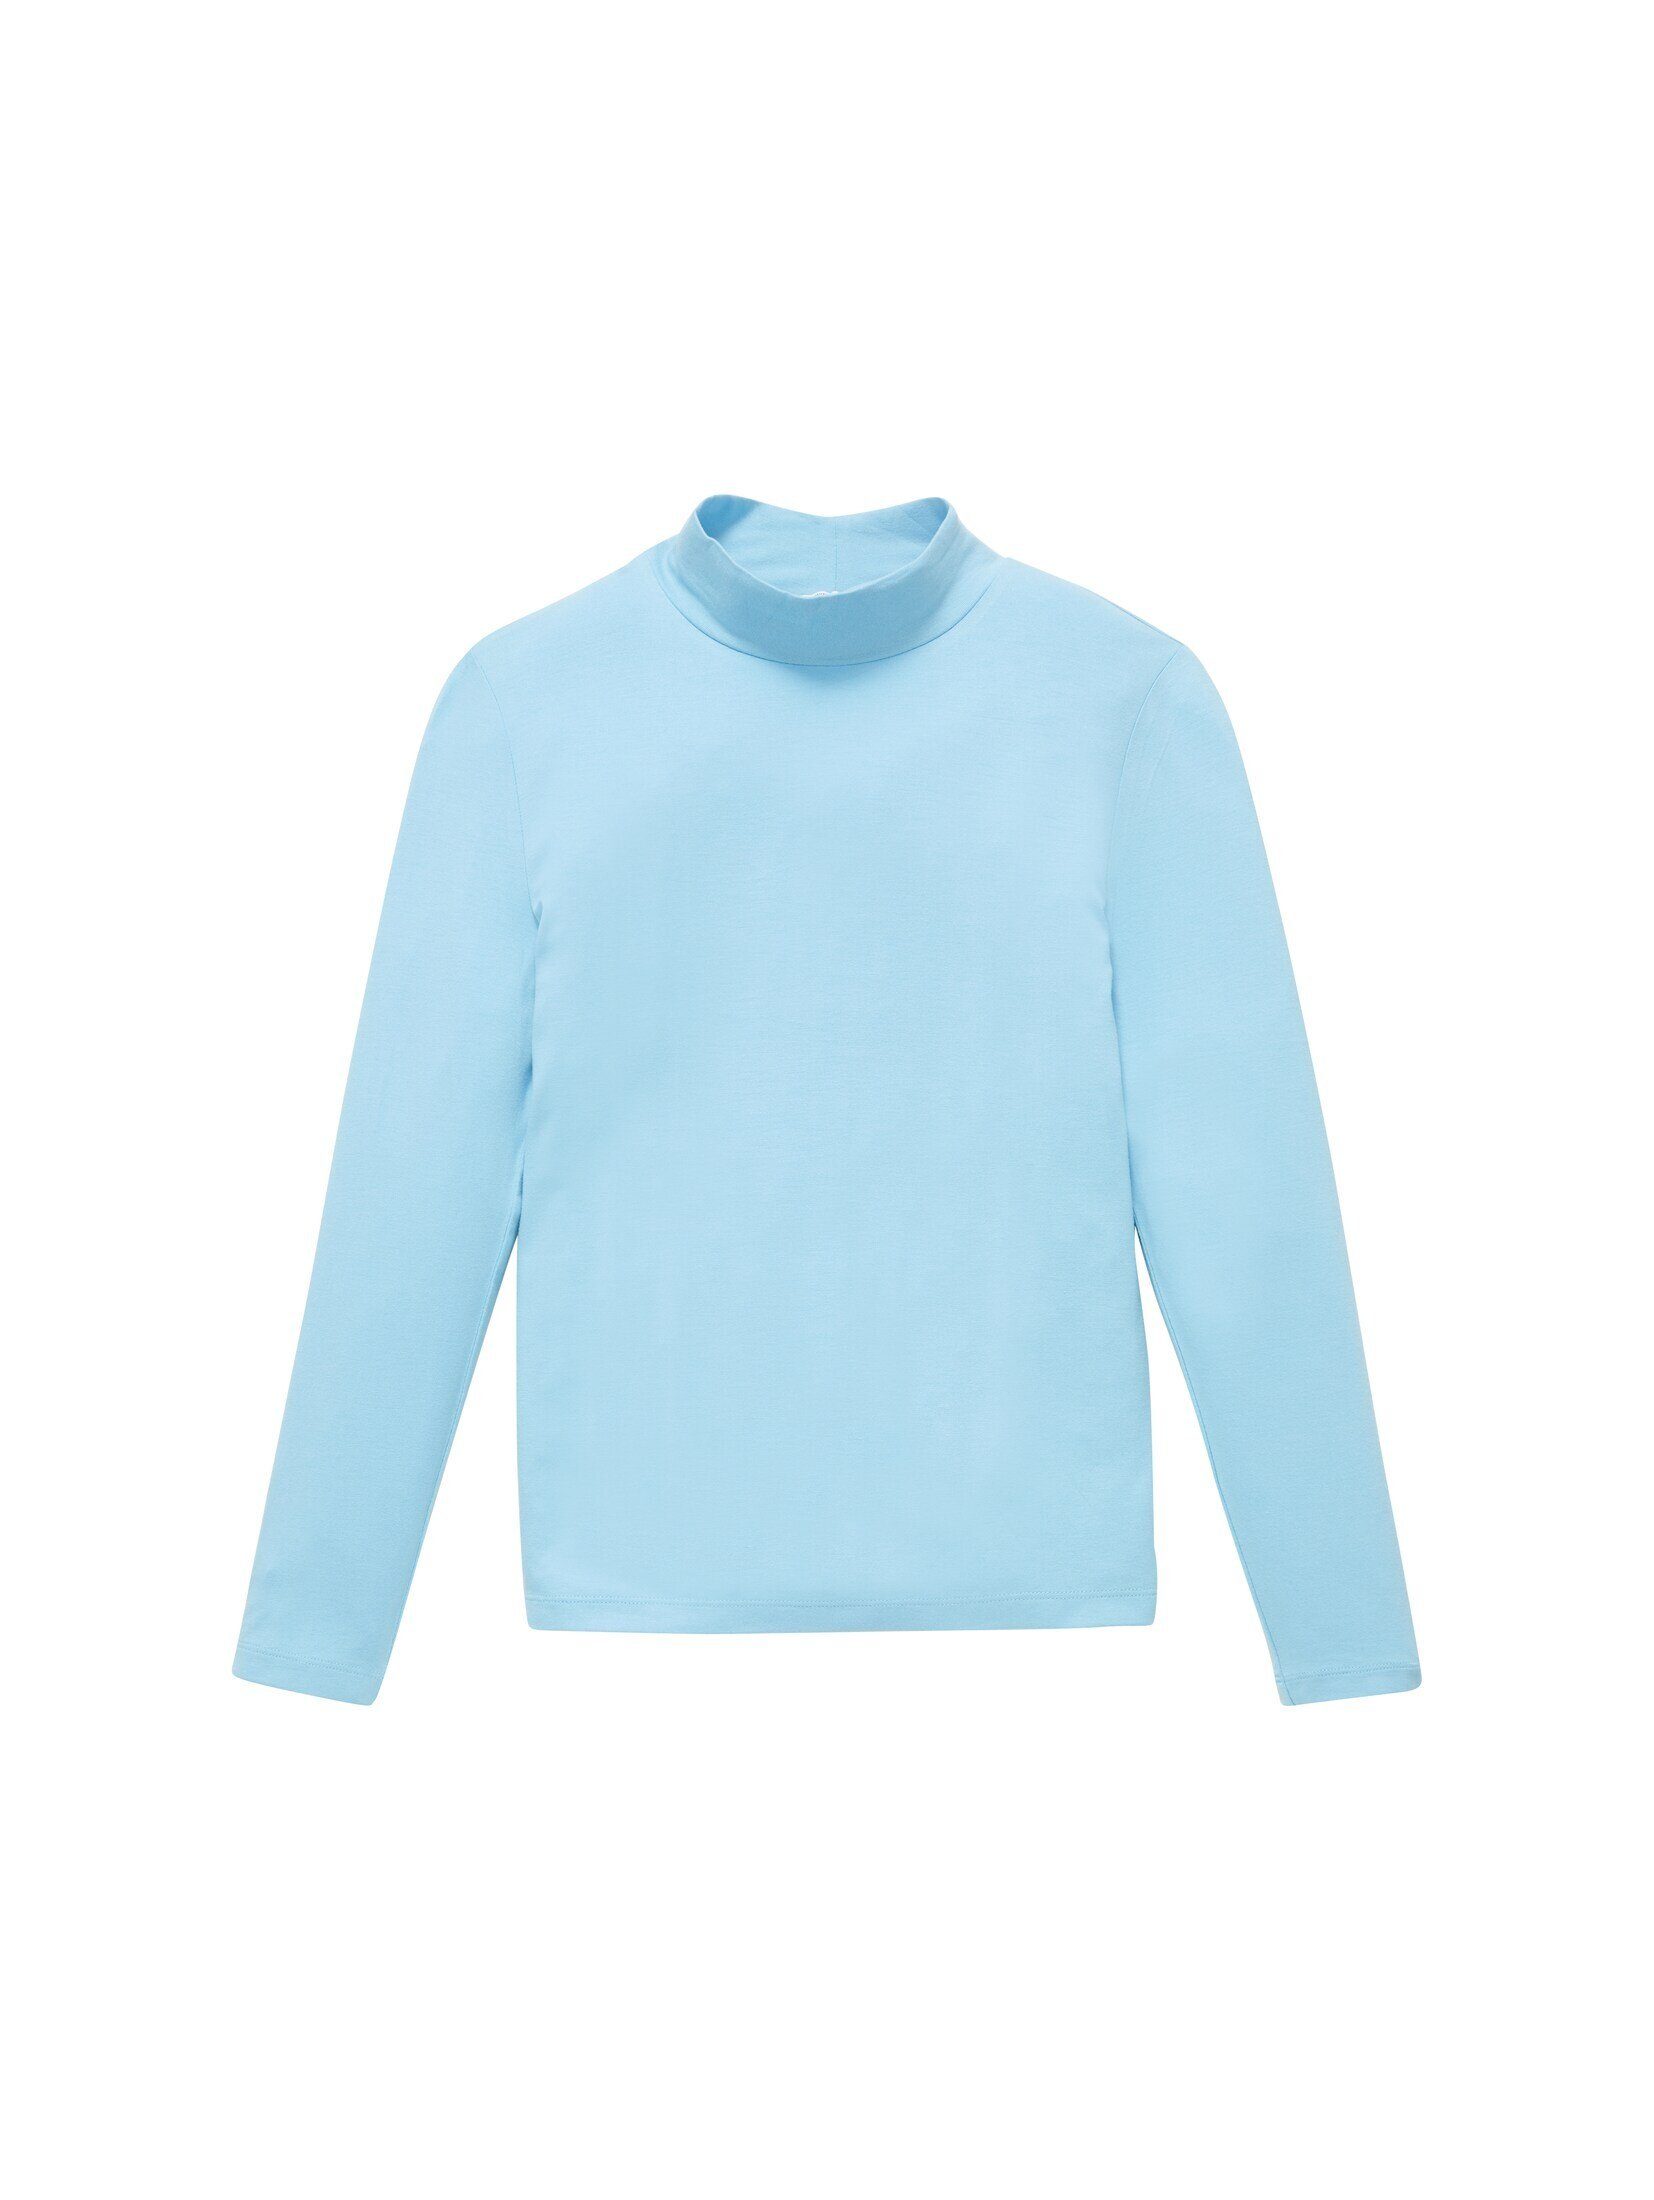 TOM TAILOR T-Shirt Langarmshirt mit LENZING(TM) ECOVERO(TM) charming blue